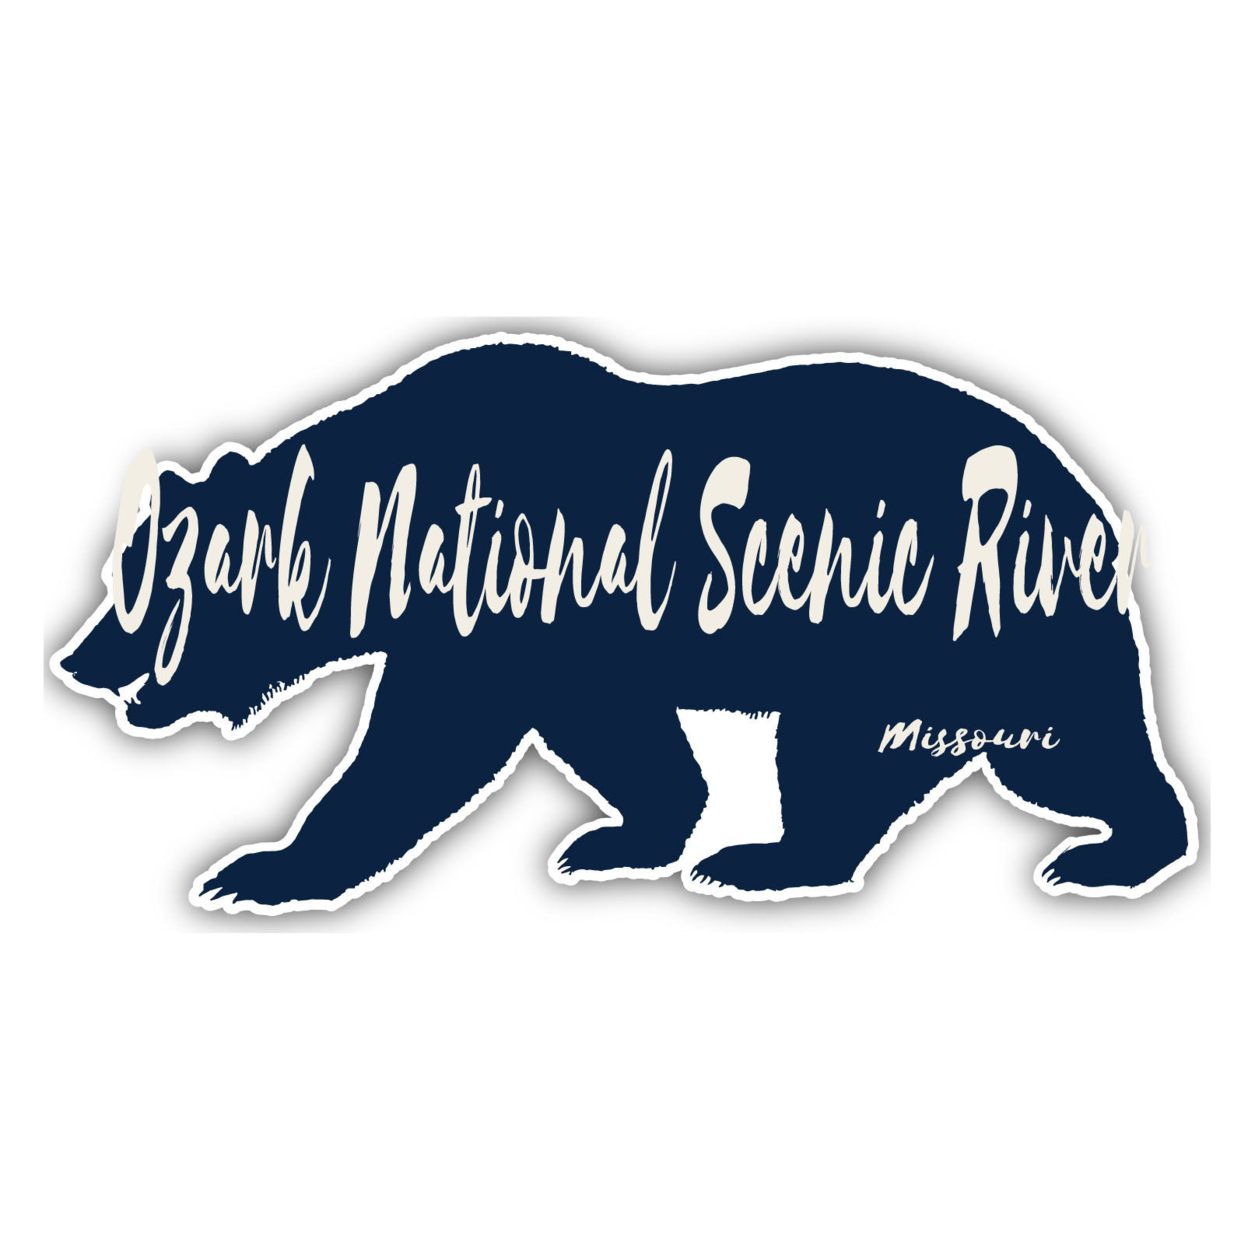 Ozark National Scenic River Missouri Souvenir Decorative Stickers (Choose Theme And Size) - Single Unit, 2-Inch, Bear